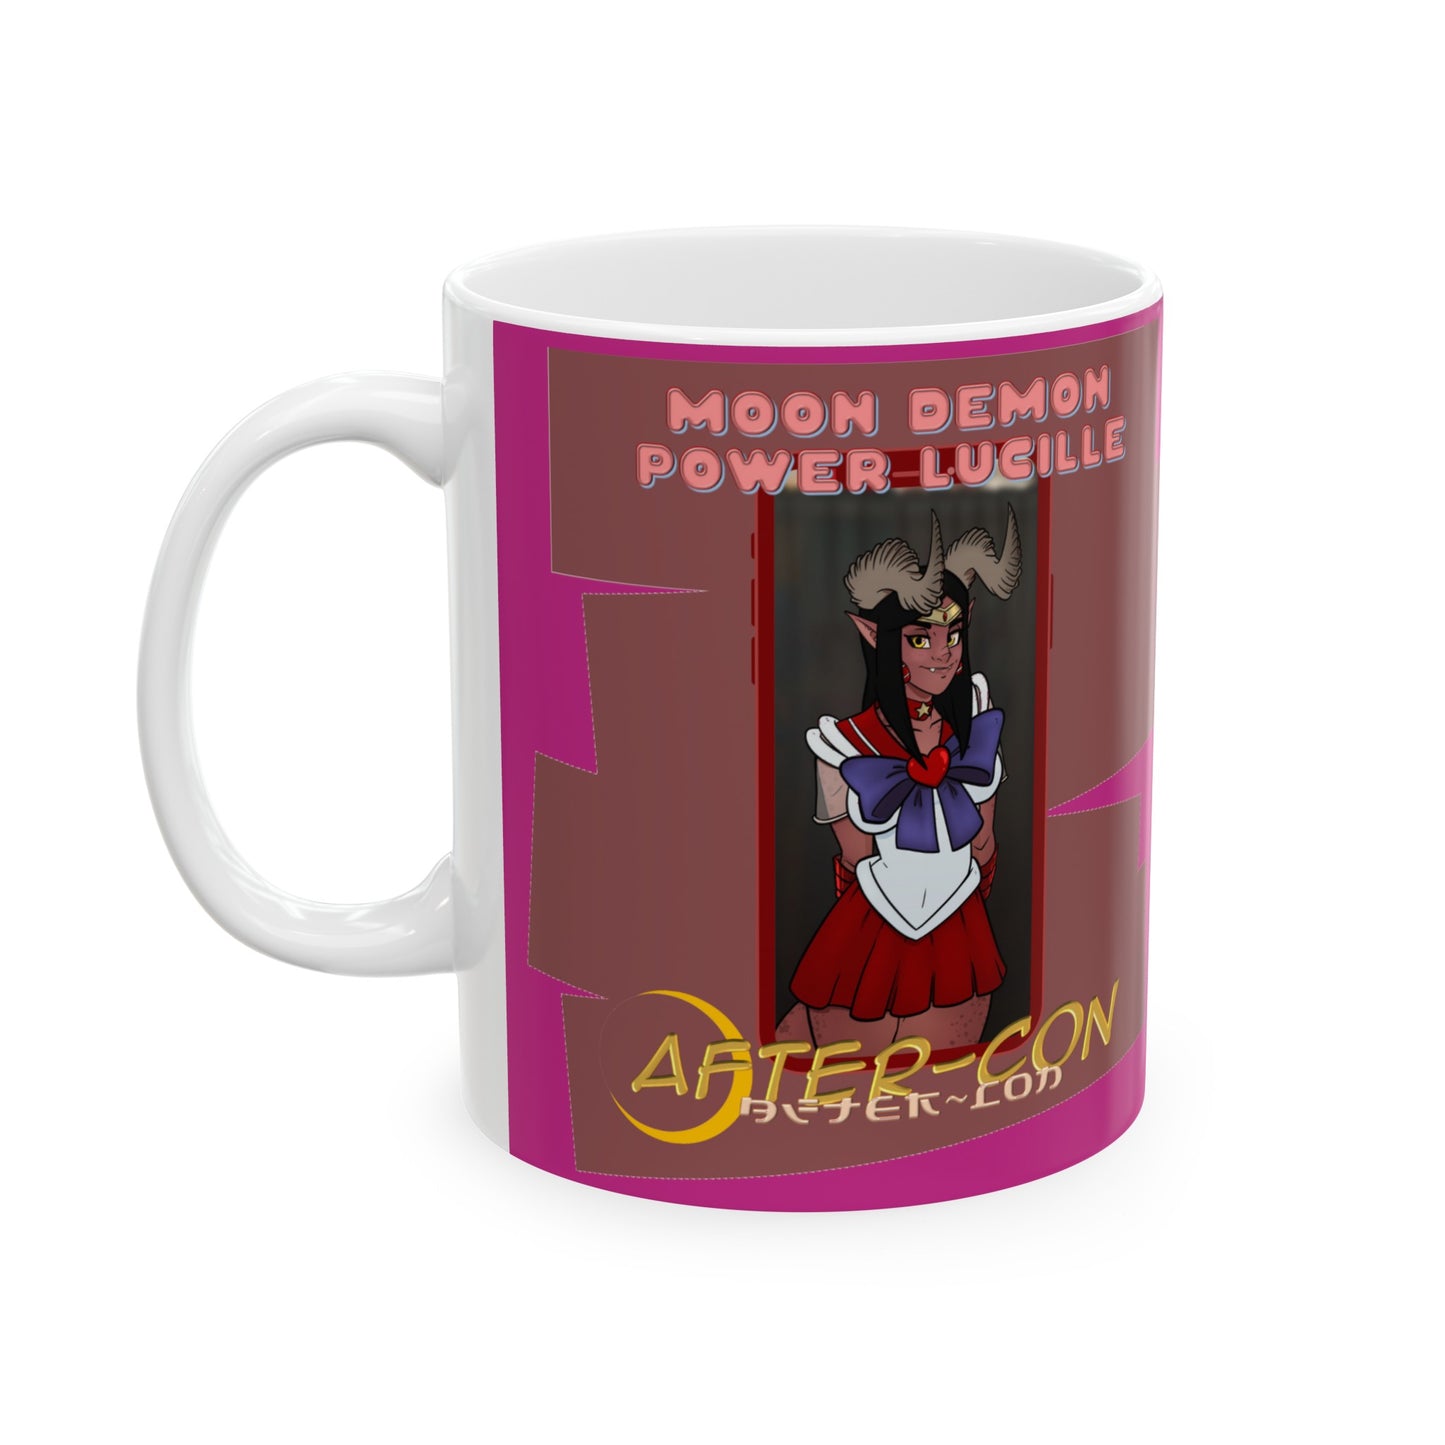 After-con "Moon Demon Power Lucille" Ceramic Mug 11 / 15 oz